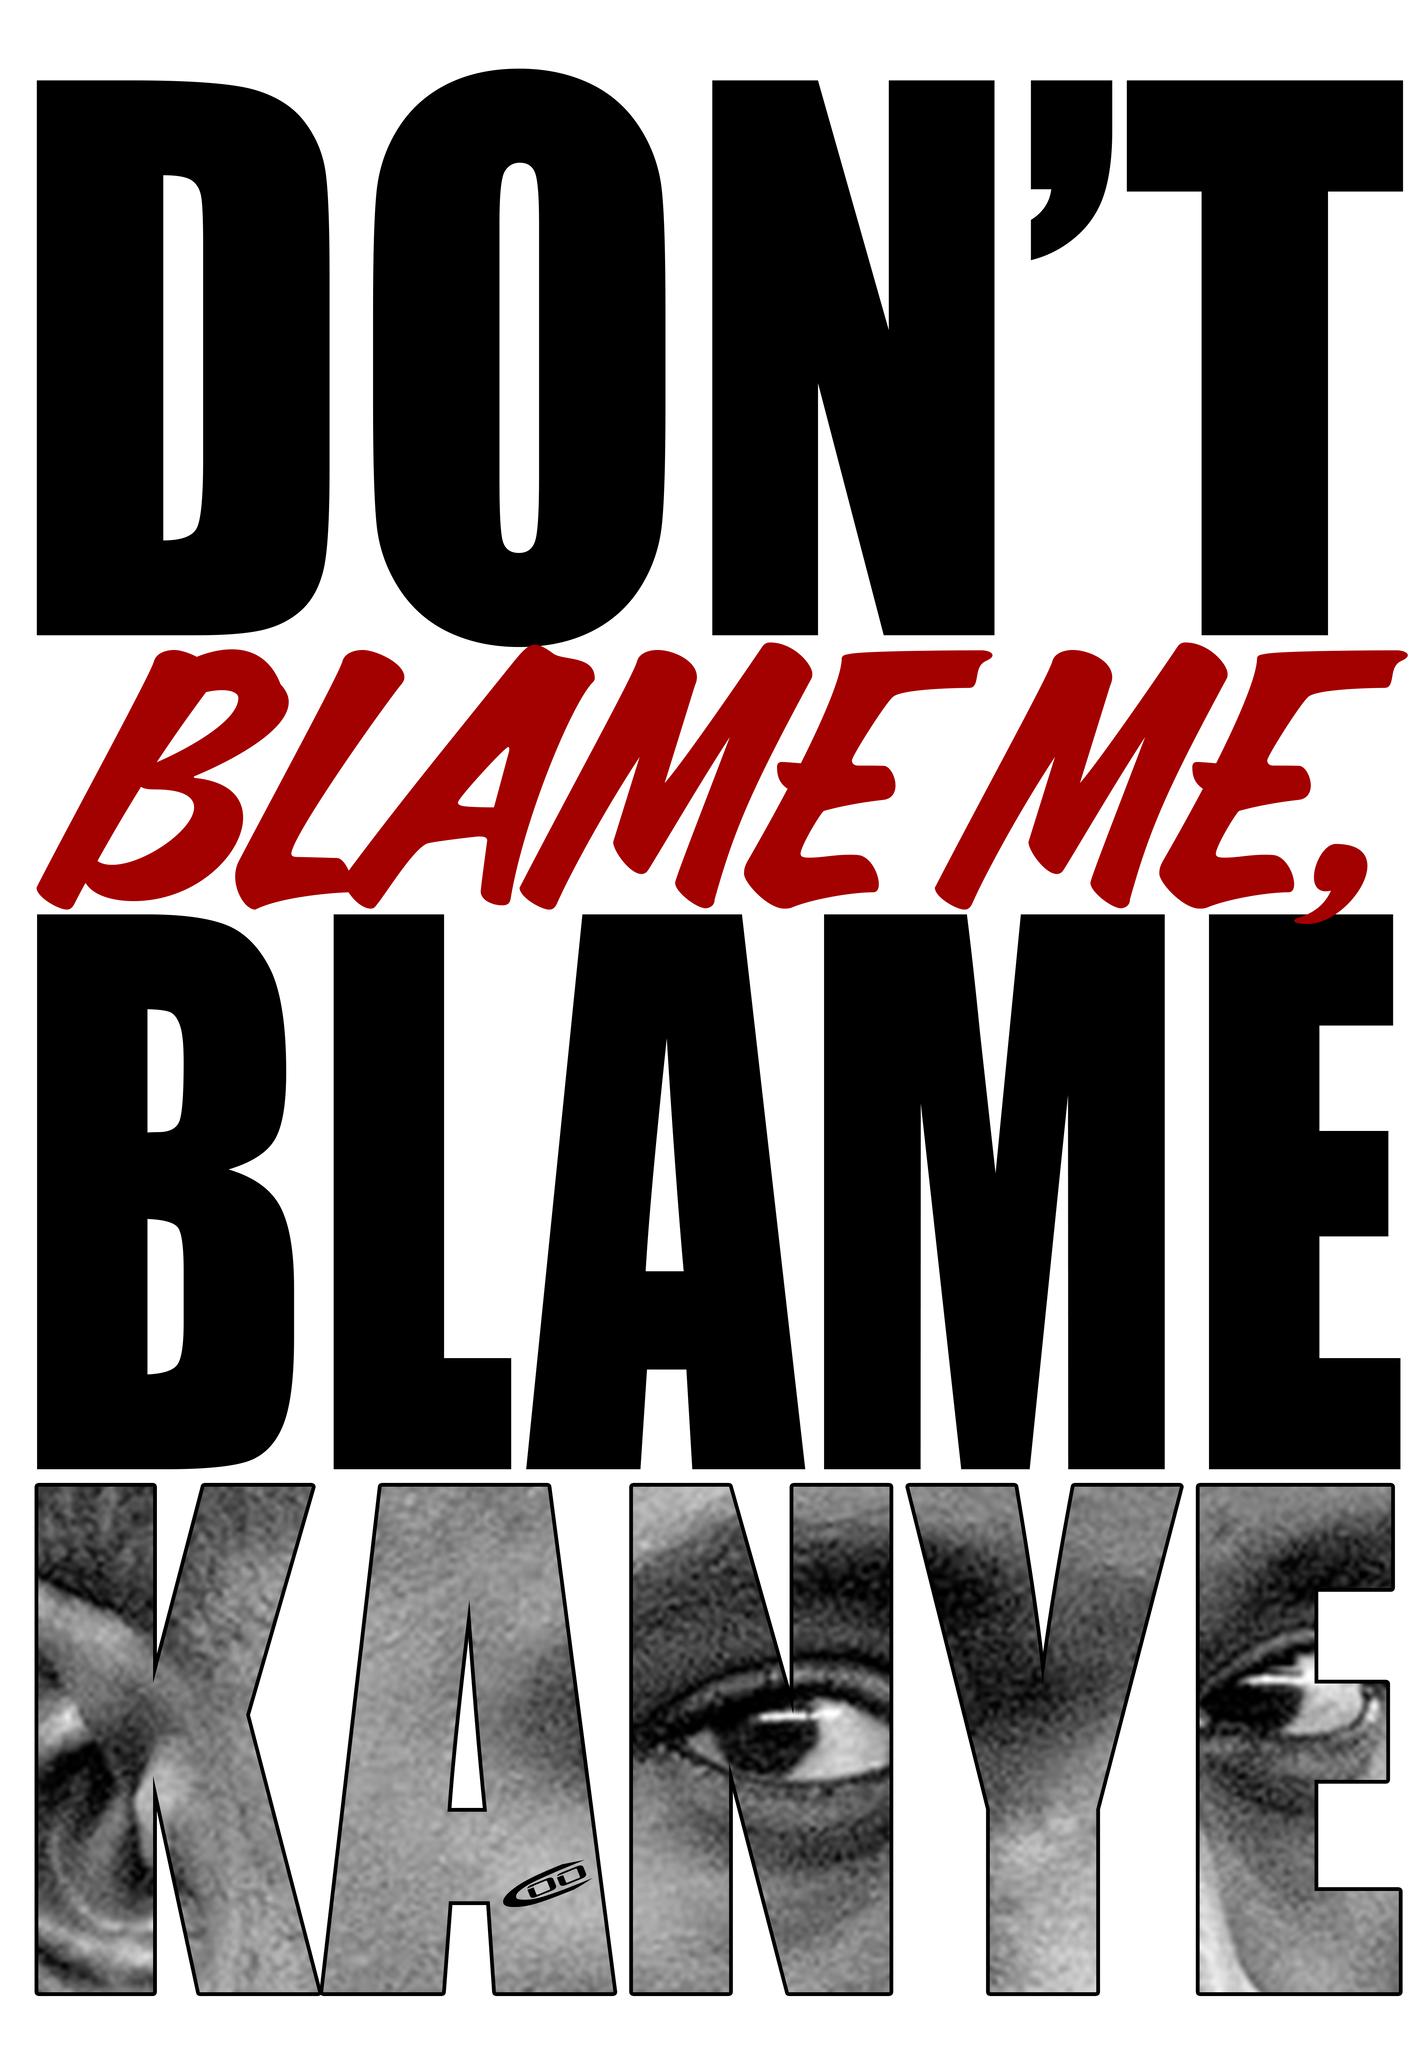 Don’t Blame Me, Blame Kanye